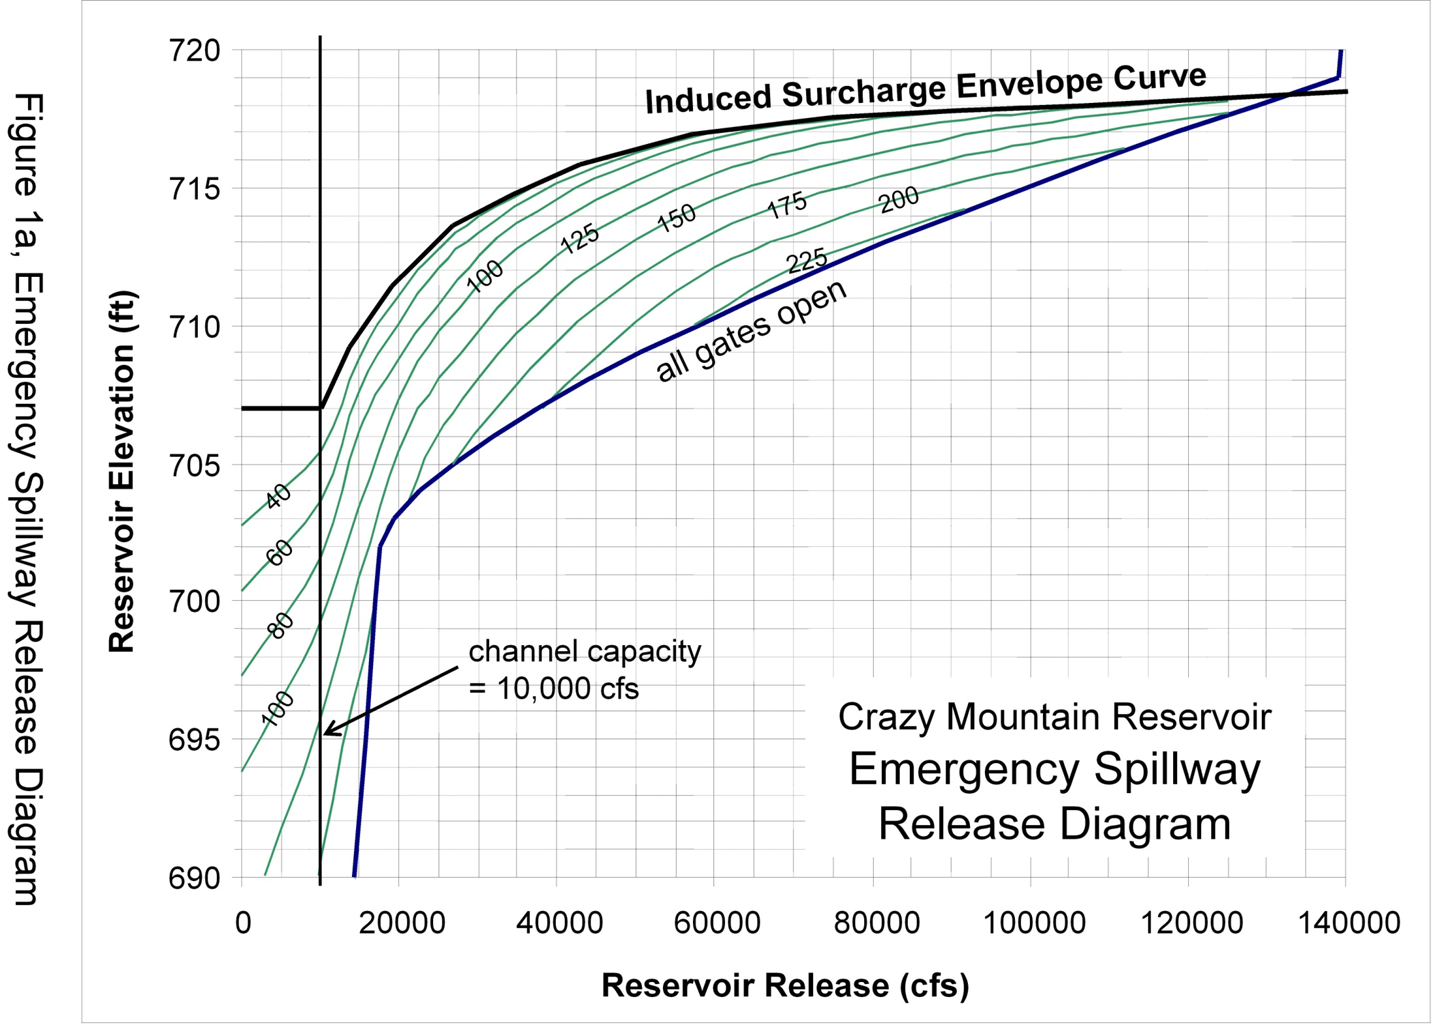 Figure 1a, Emergency Spillway Release Diagram